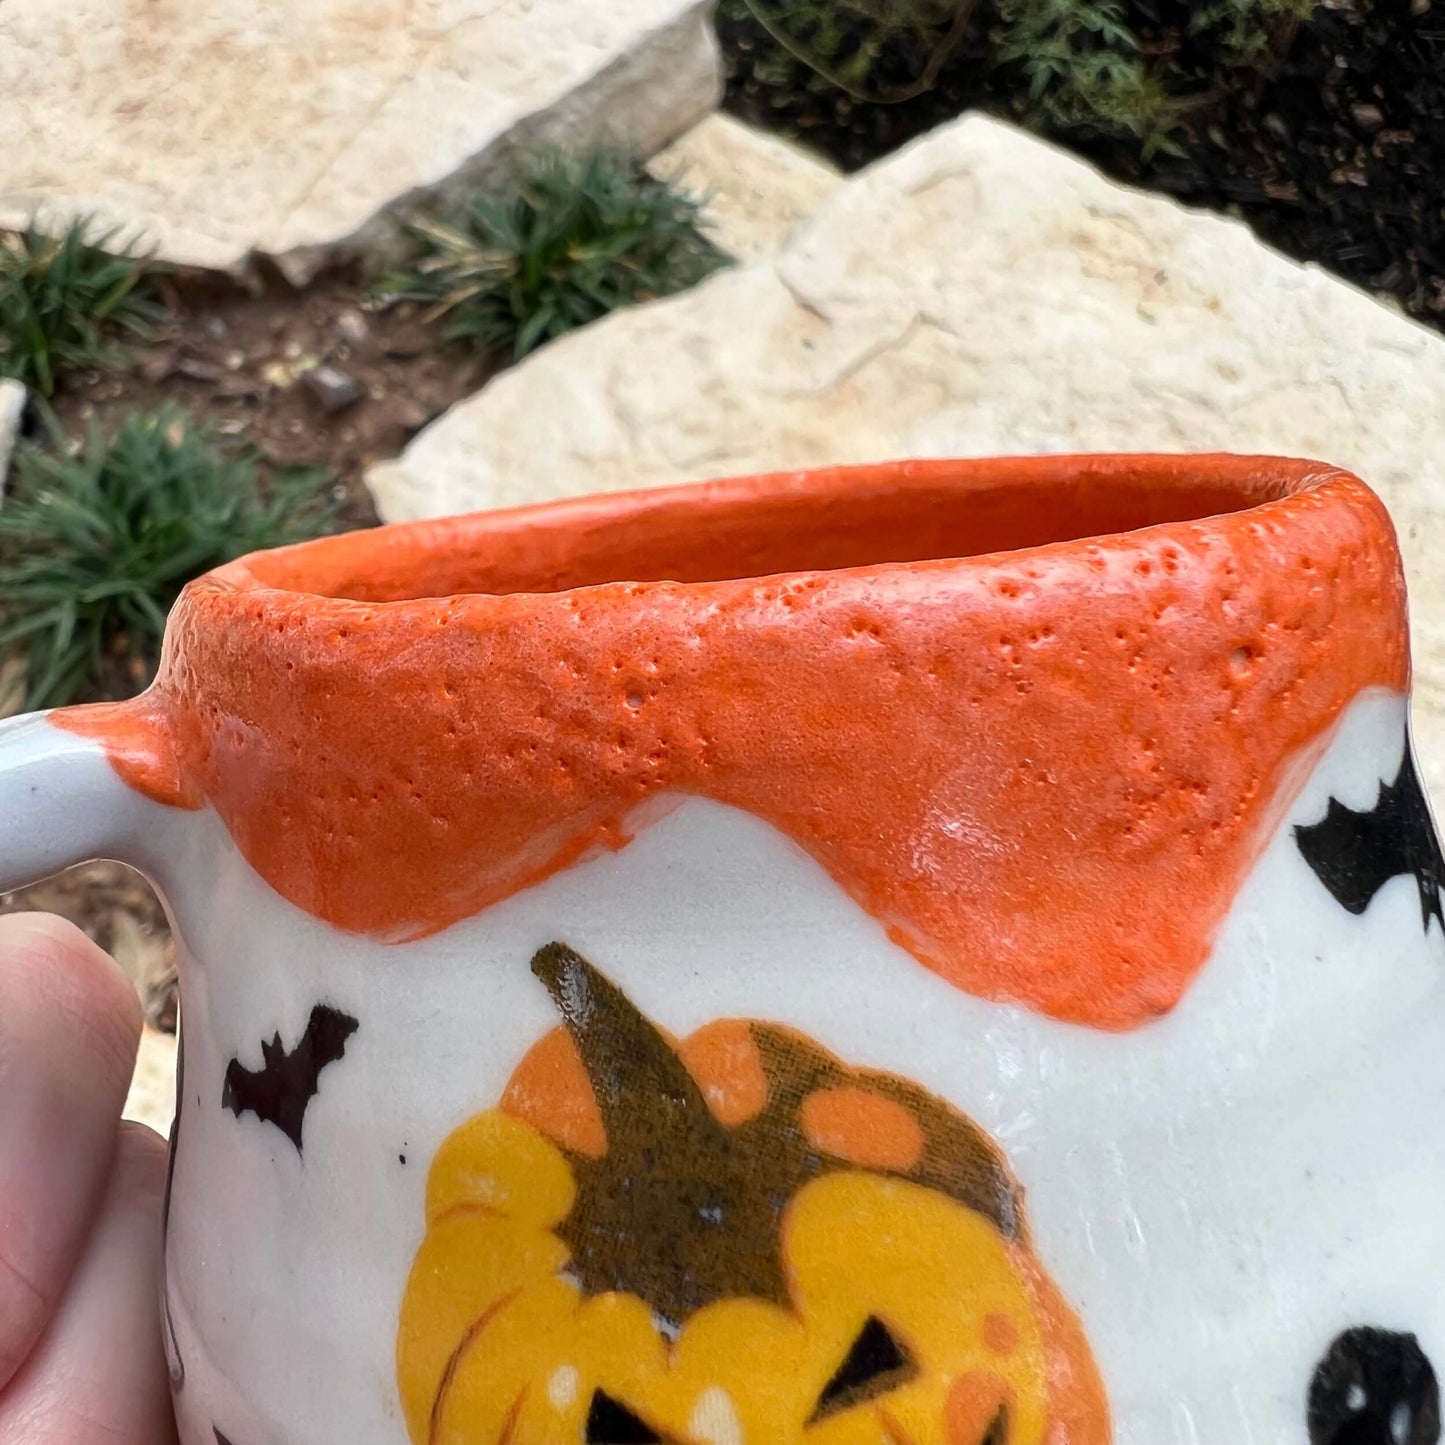 Halloween ceramic cauldron mug